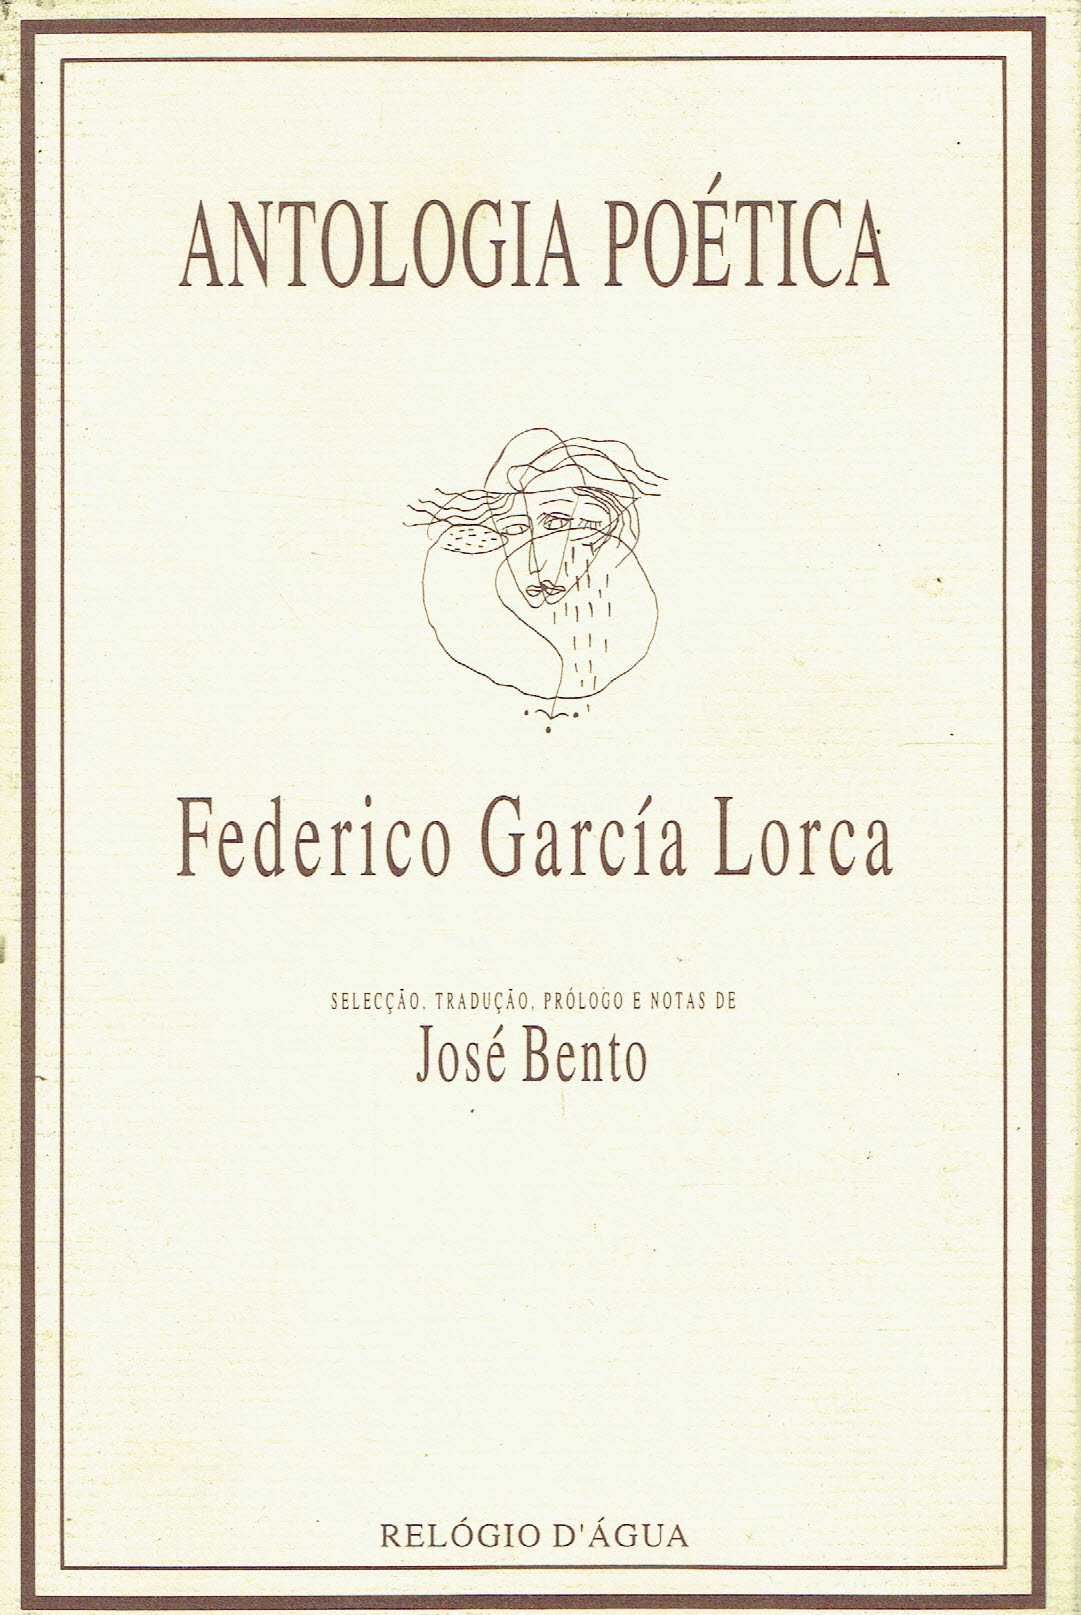 11398

Antologia Poética de F.G. Lorca
de Federico García Lorca